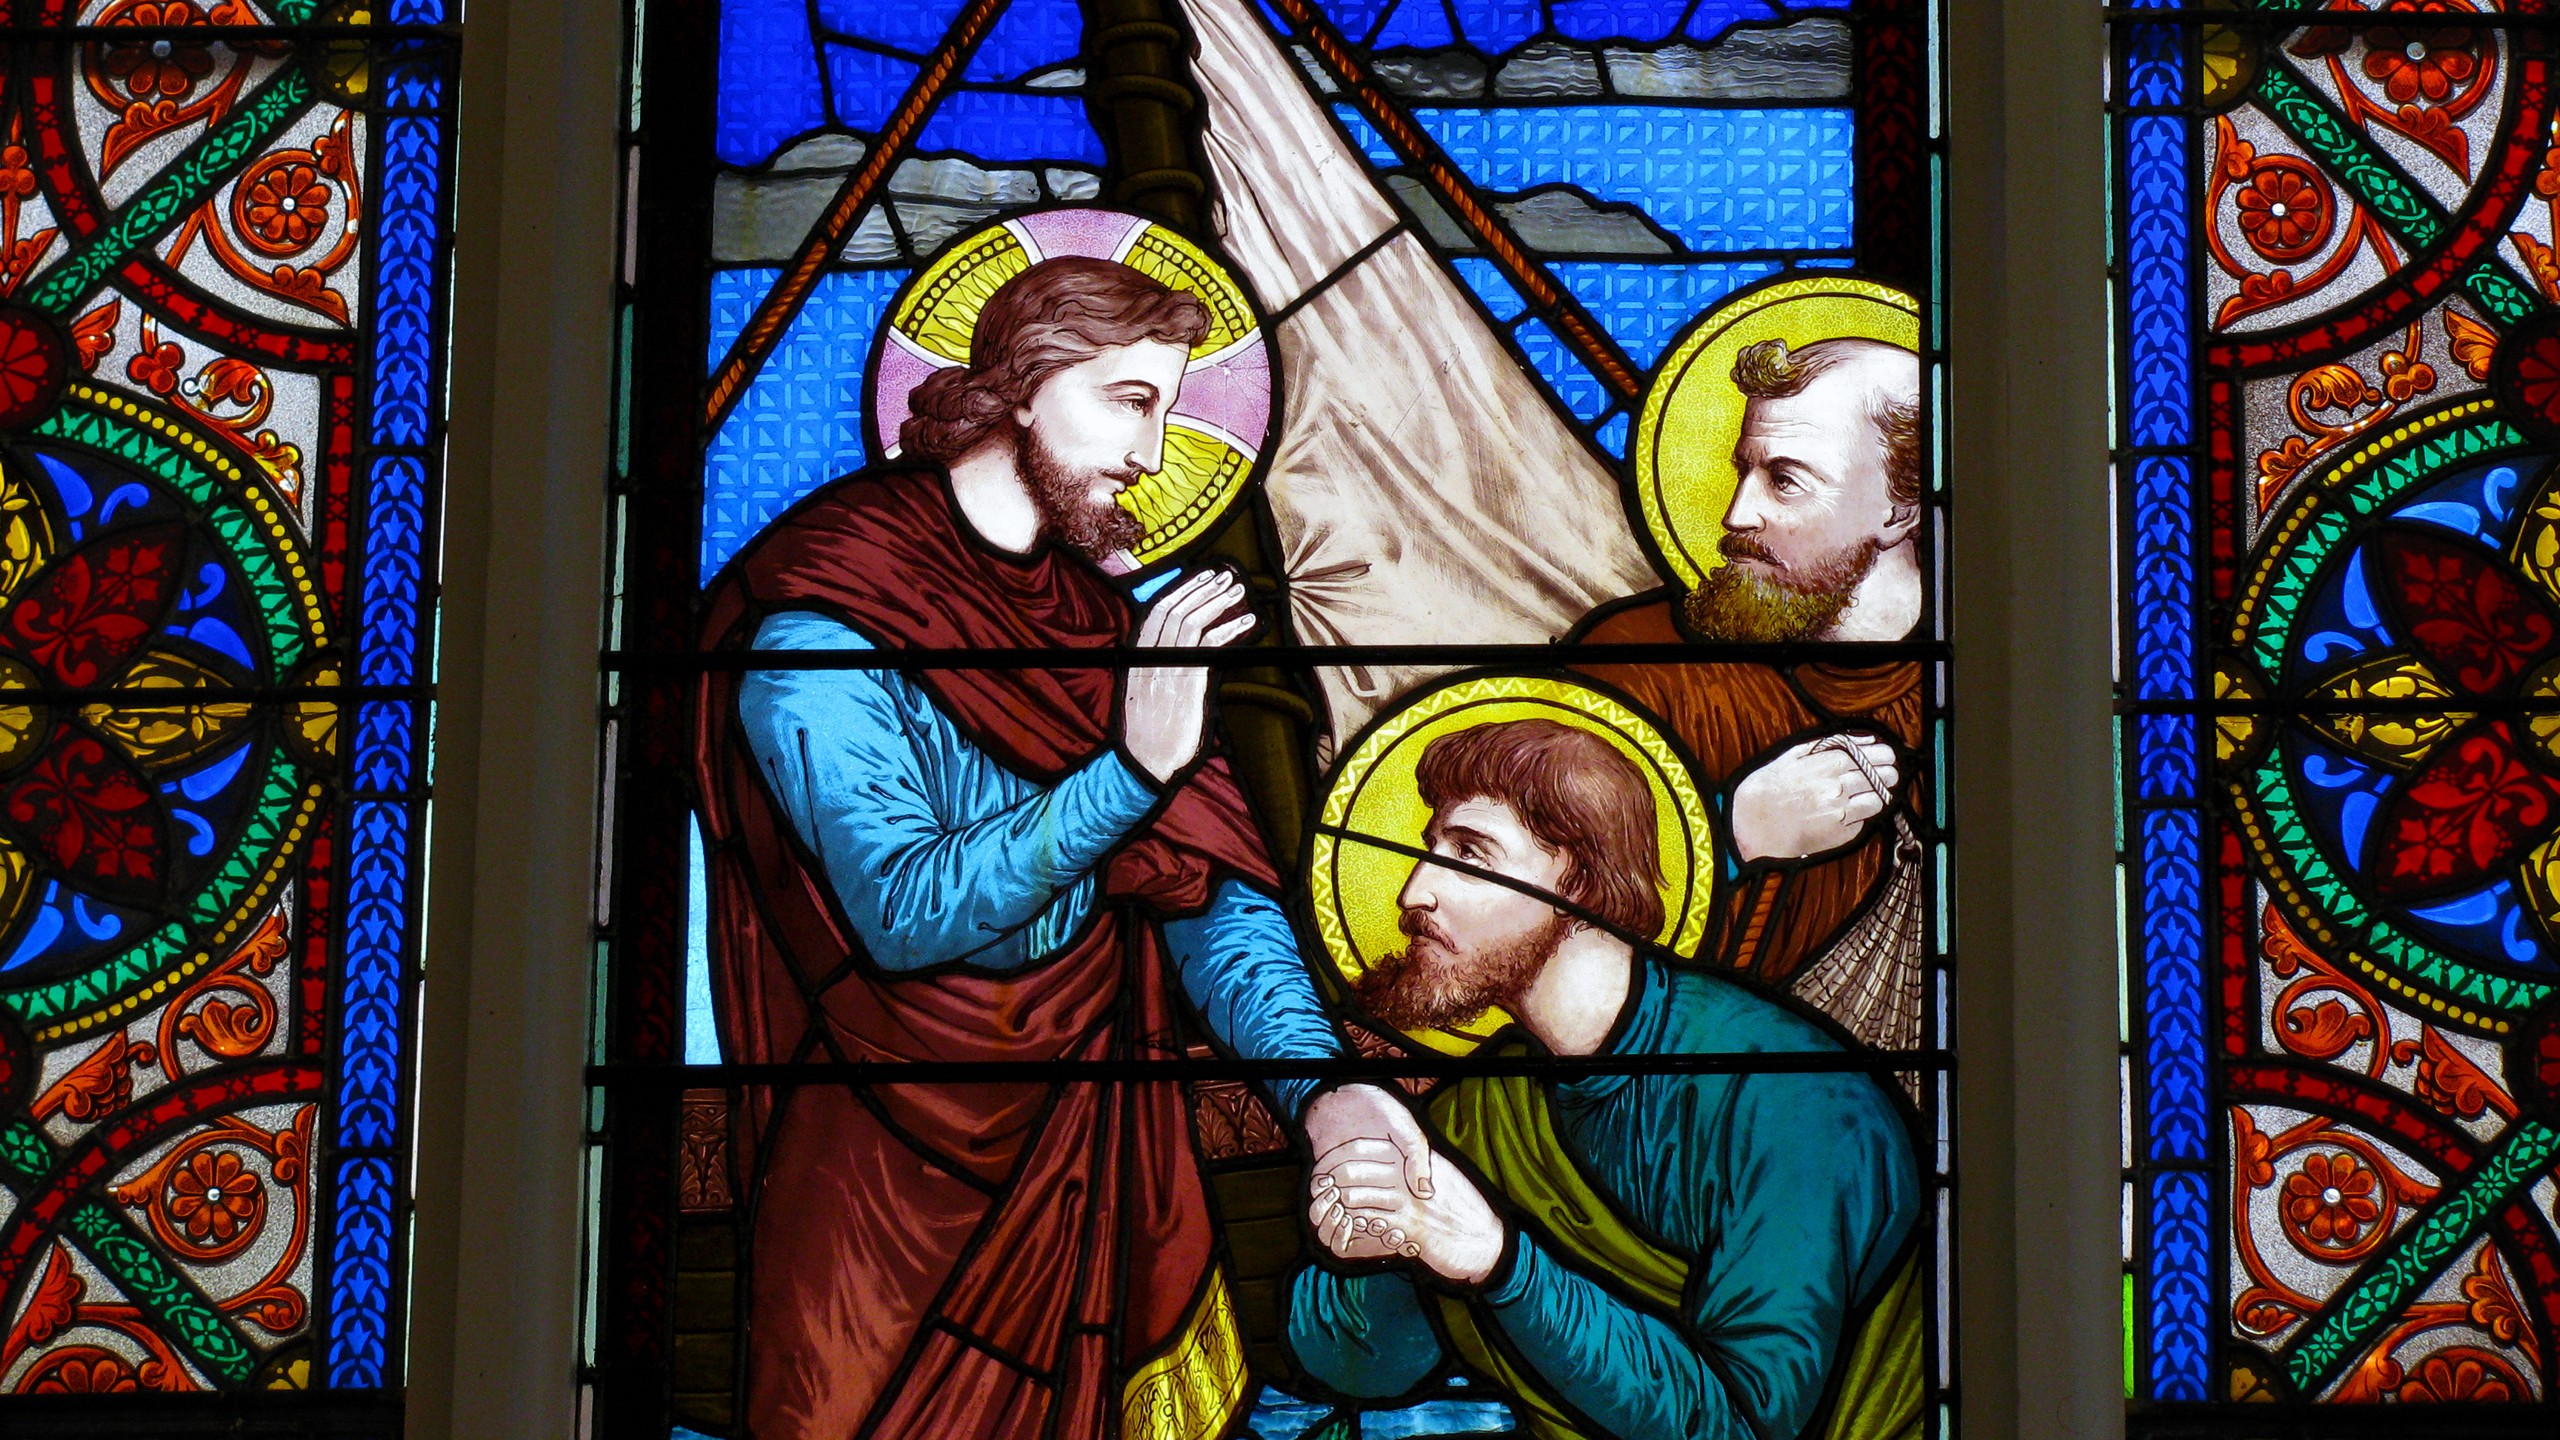 General 2560x1440 church stained glass window religion religious beard men glass